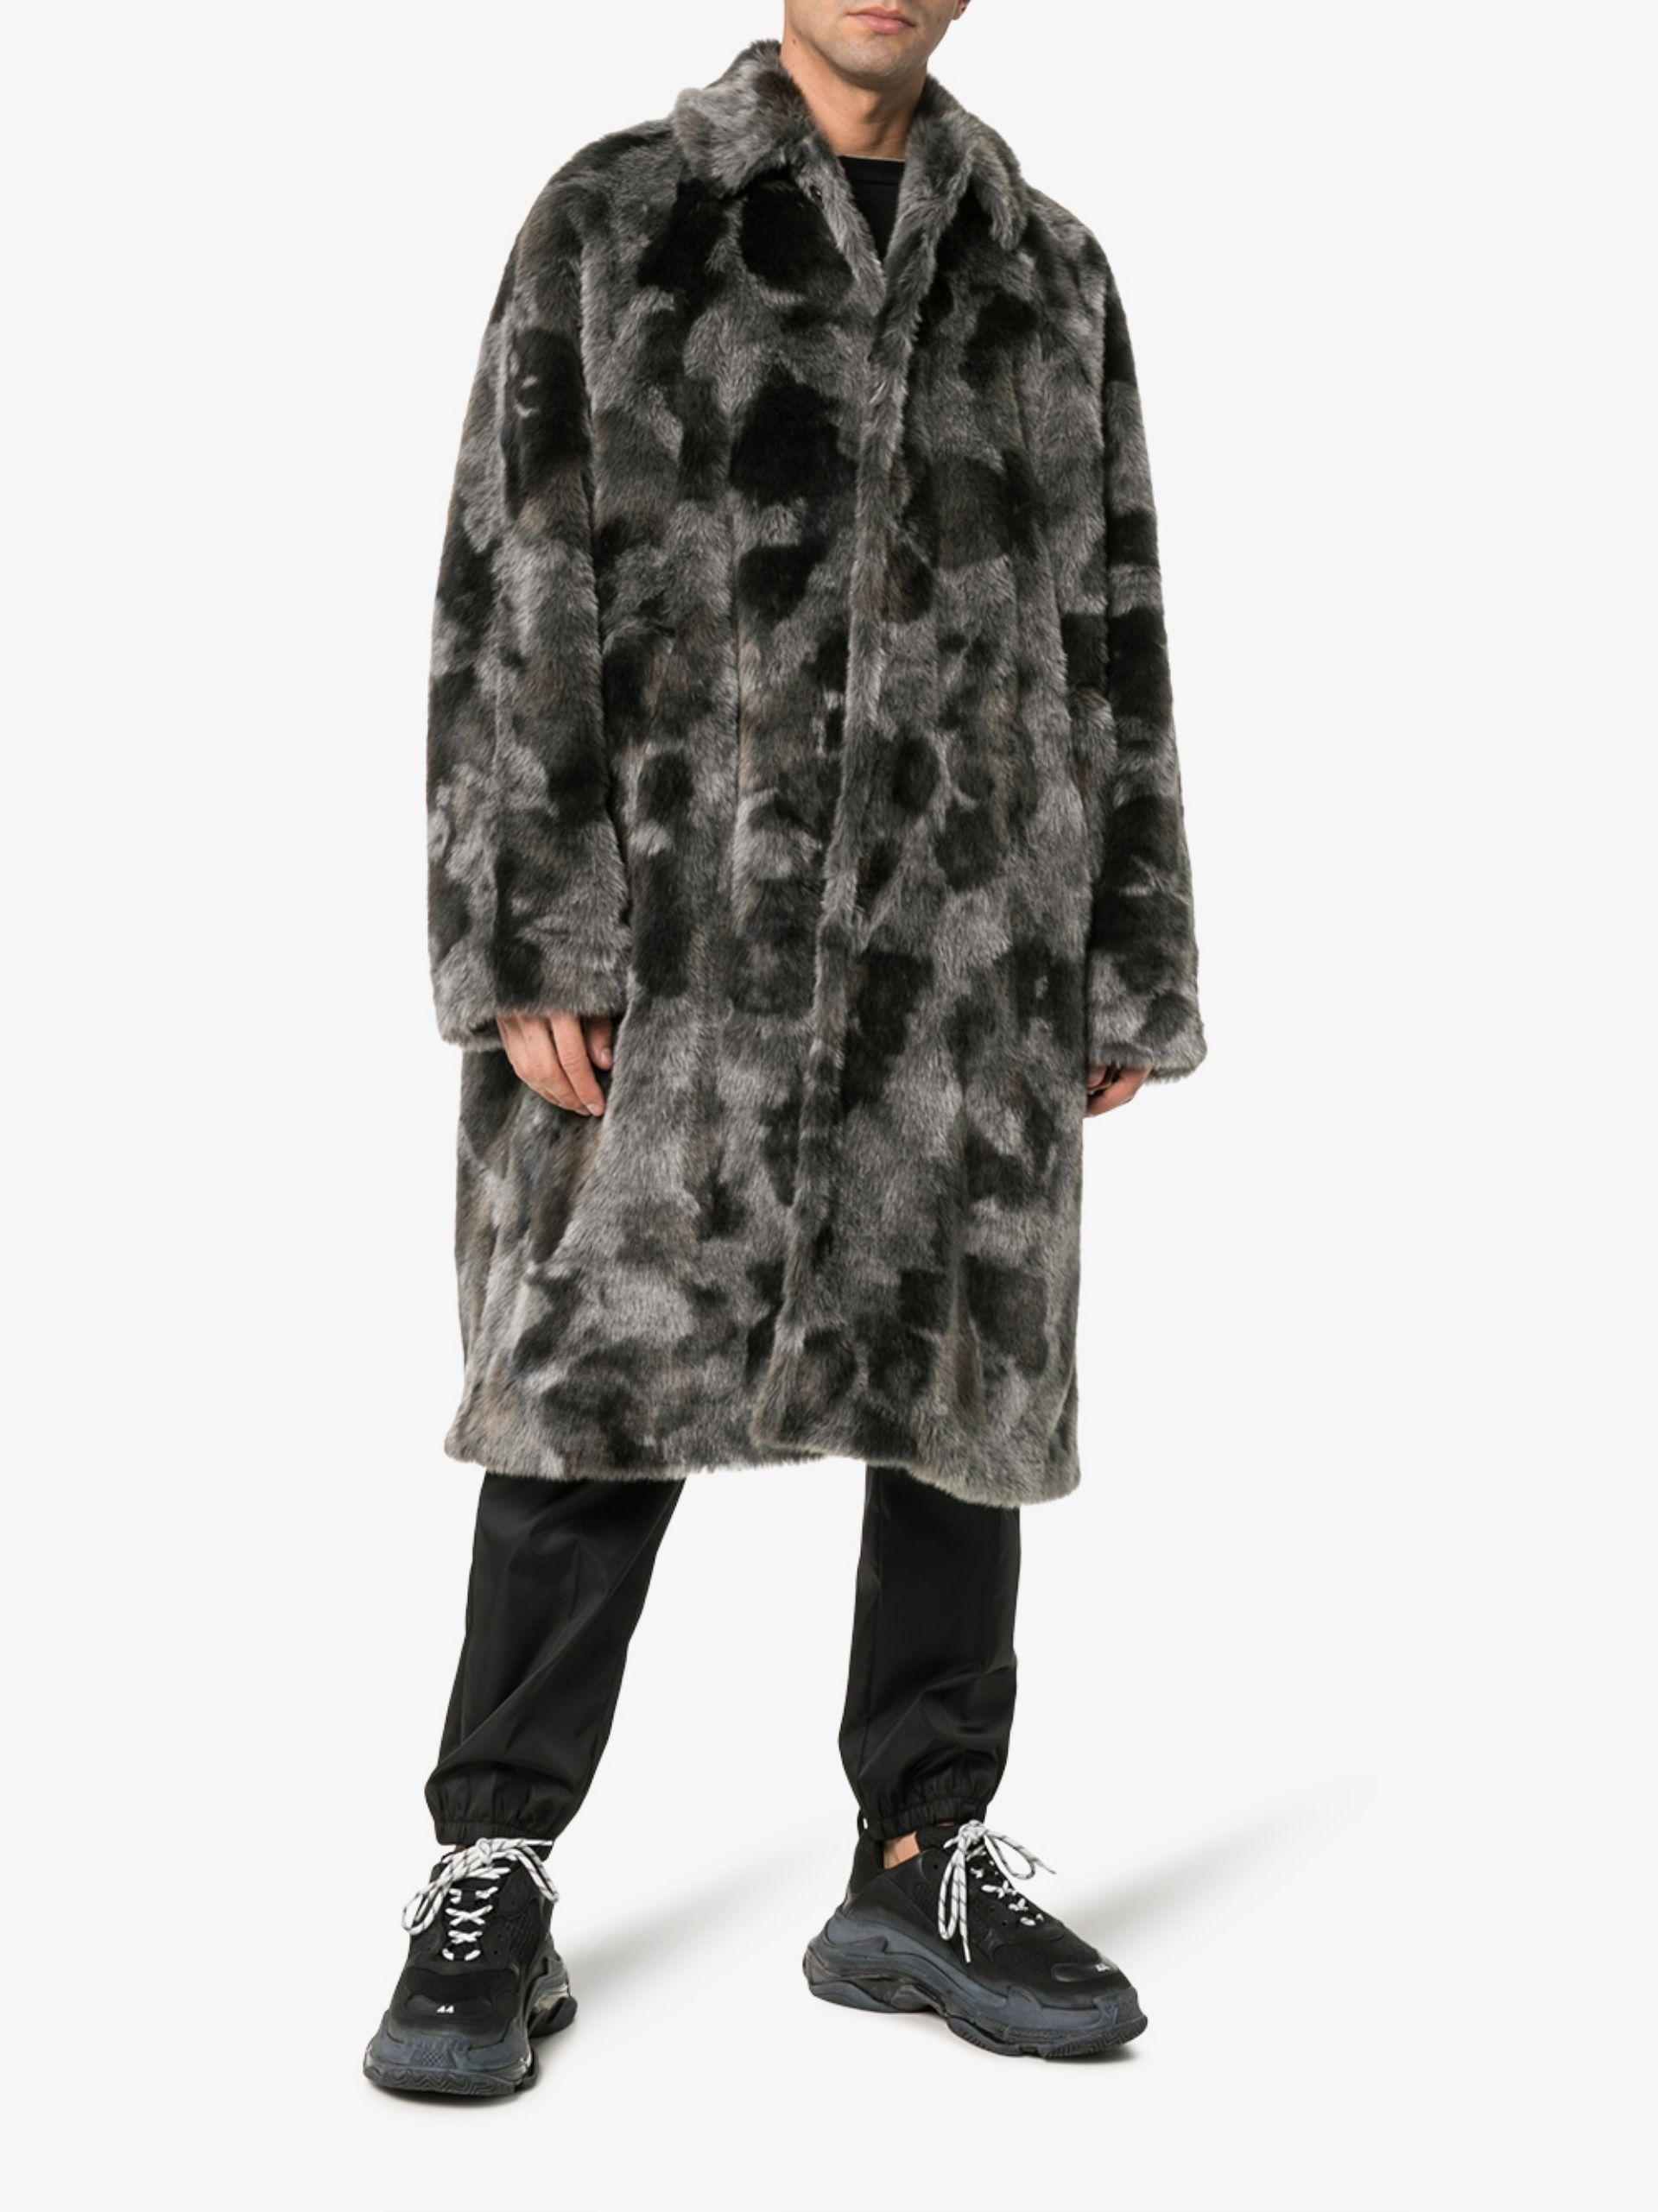 Balenciaga Faux Fur Opera Coat in Grey (Black) for Men - Save 50% | Lyst